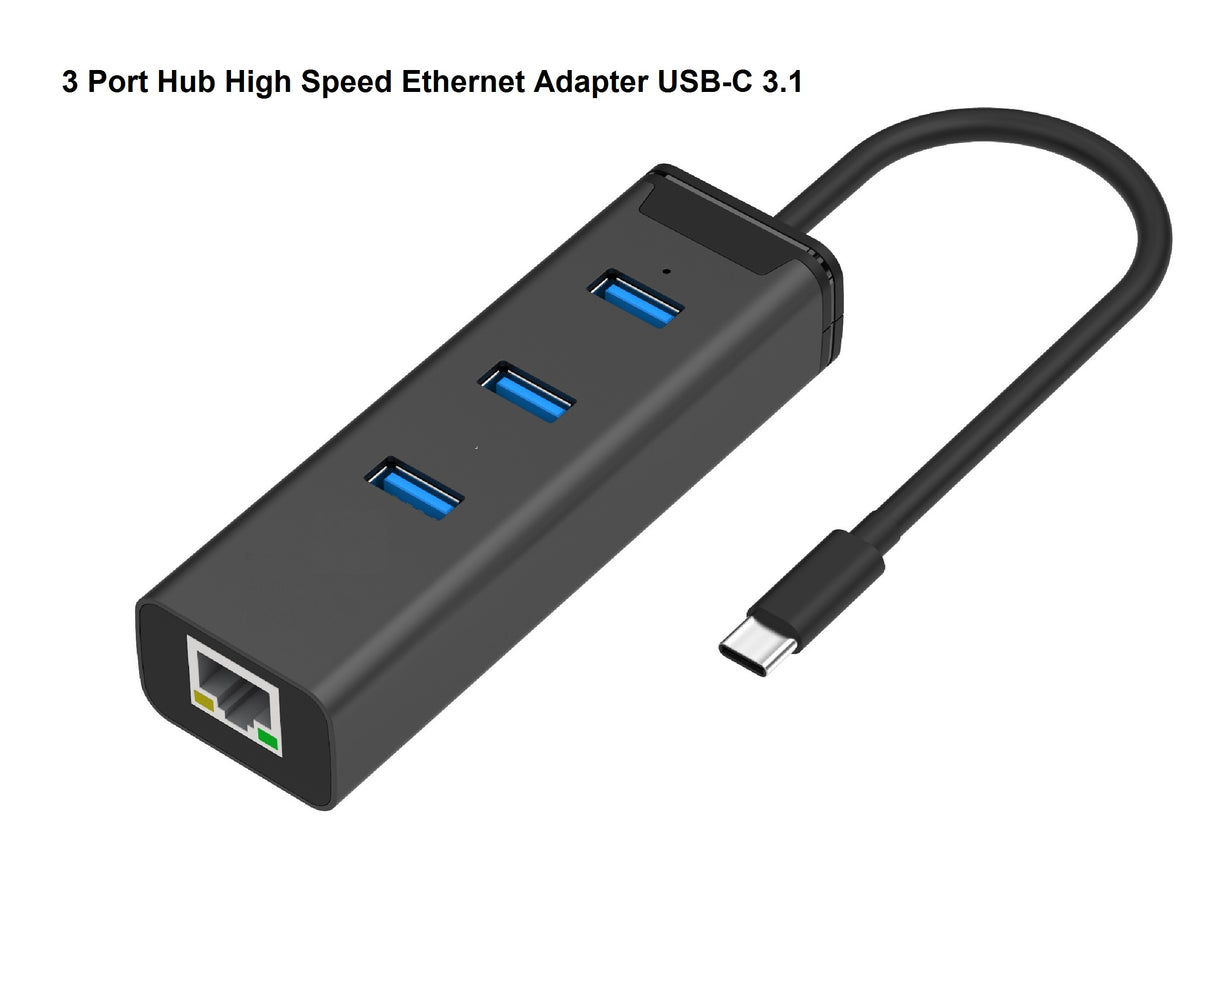 Adaptador USB-C Gigabit Ethernet RJ45 10/100/1000 Mbits Hub 3 Portas USB 3.0 High Speed - Multi4you®